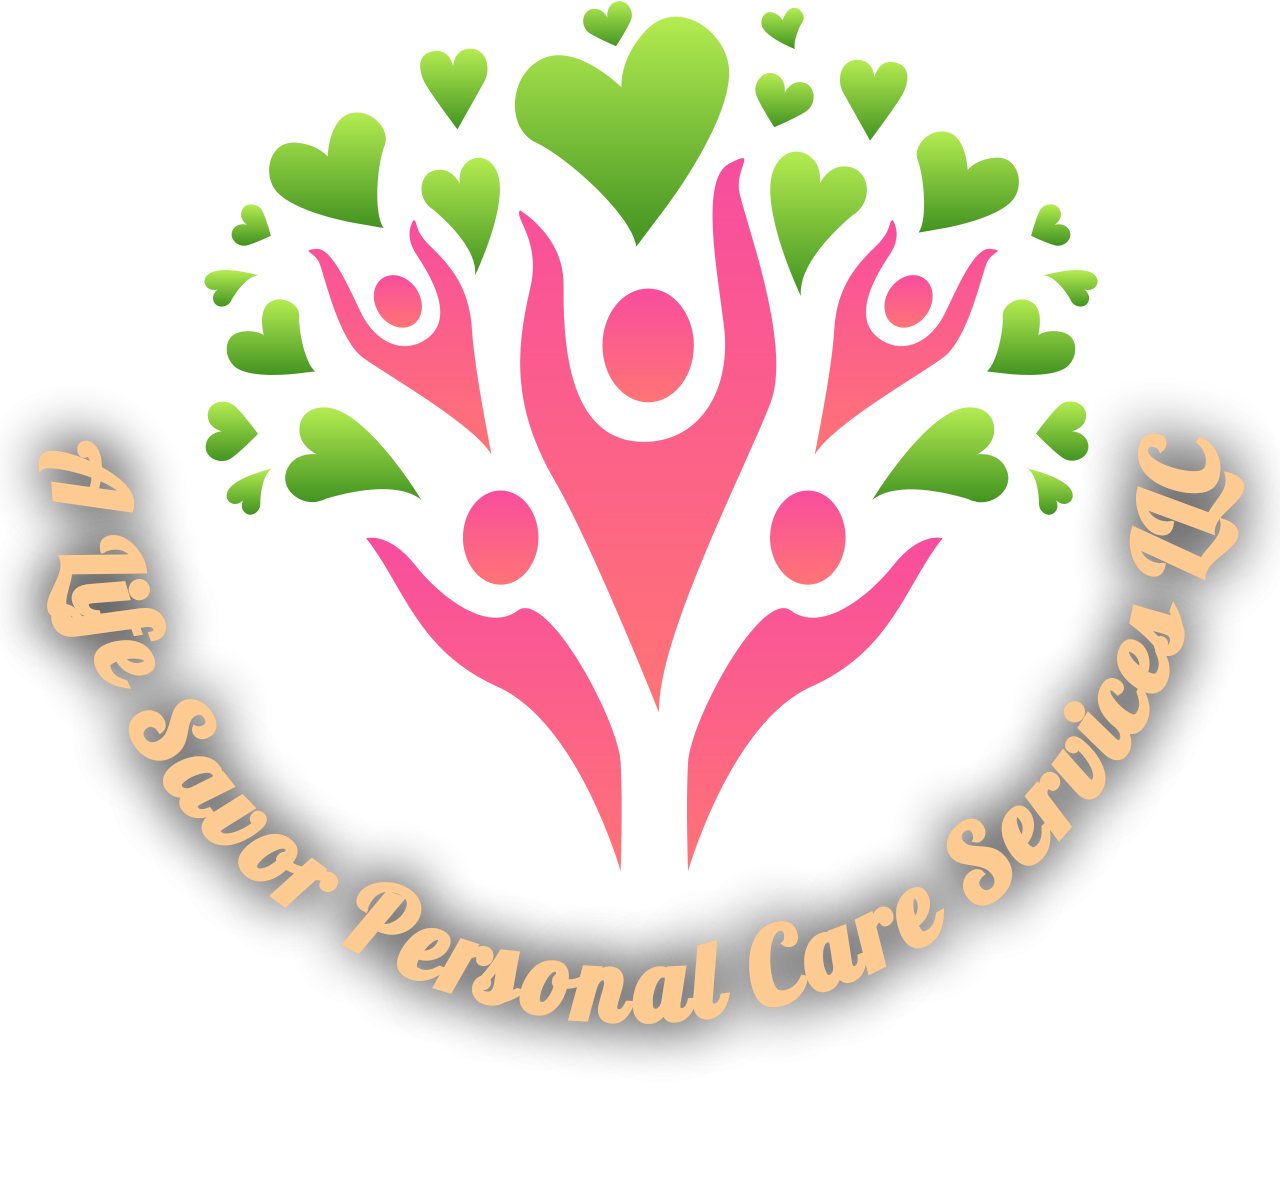 A Life Savor Personal Care Services LLC's logo